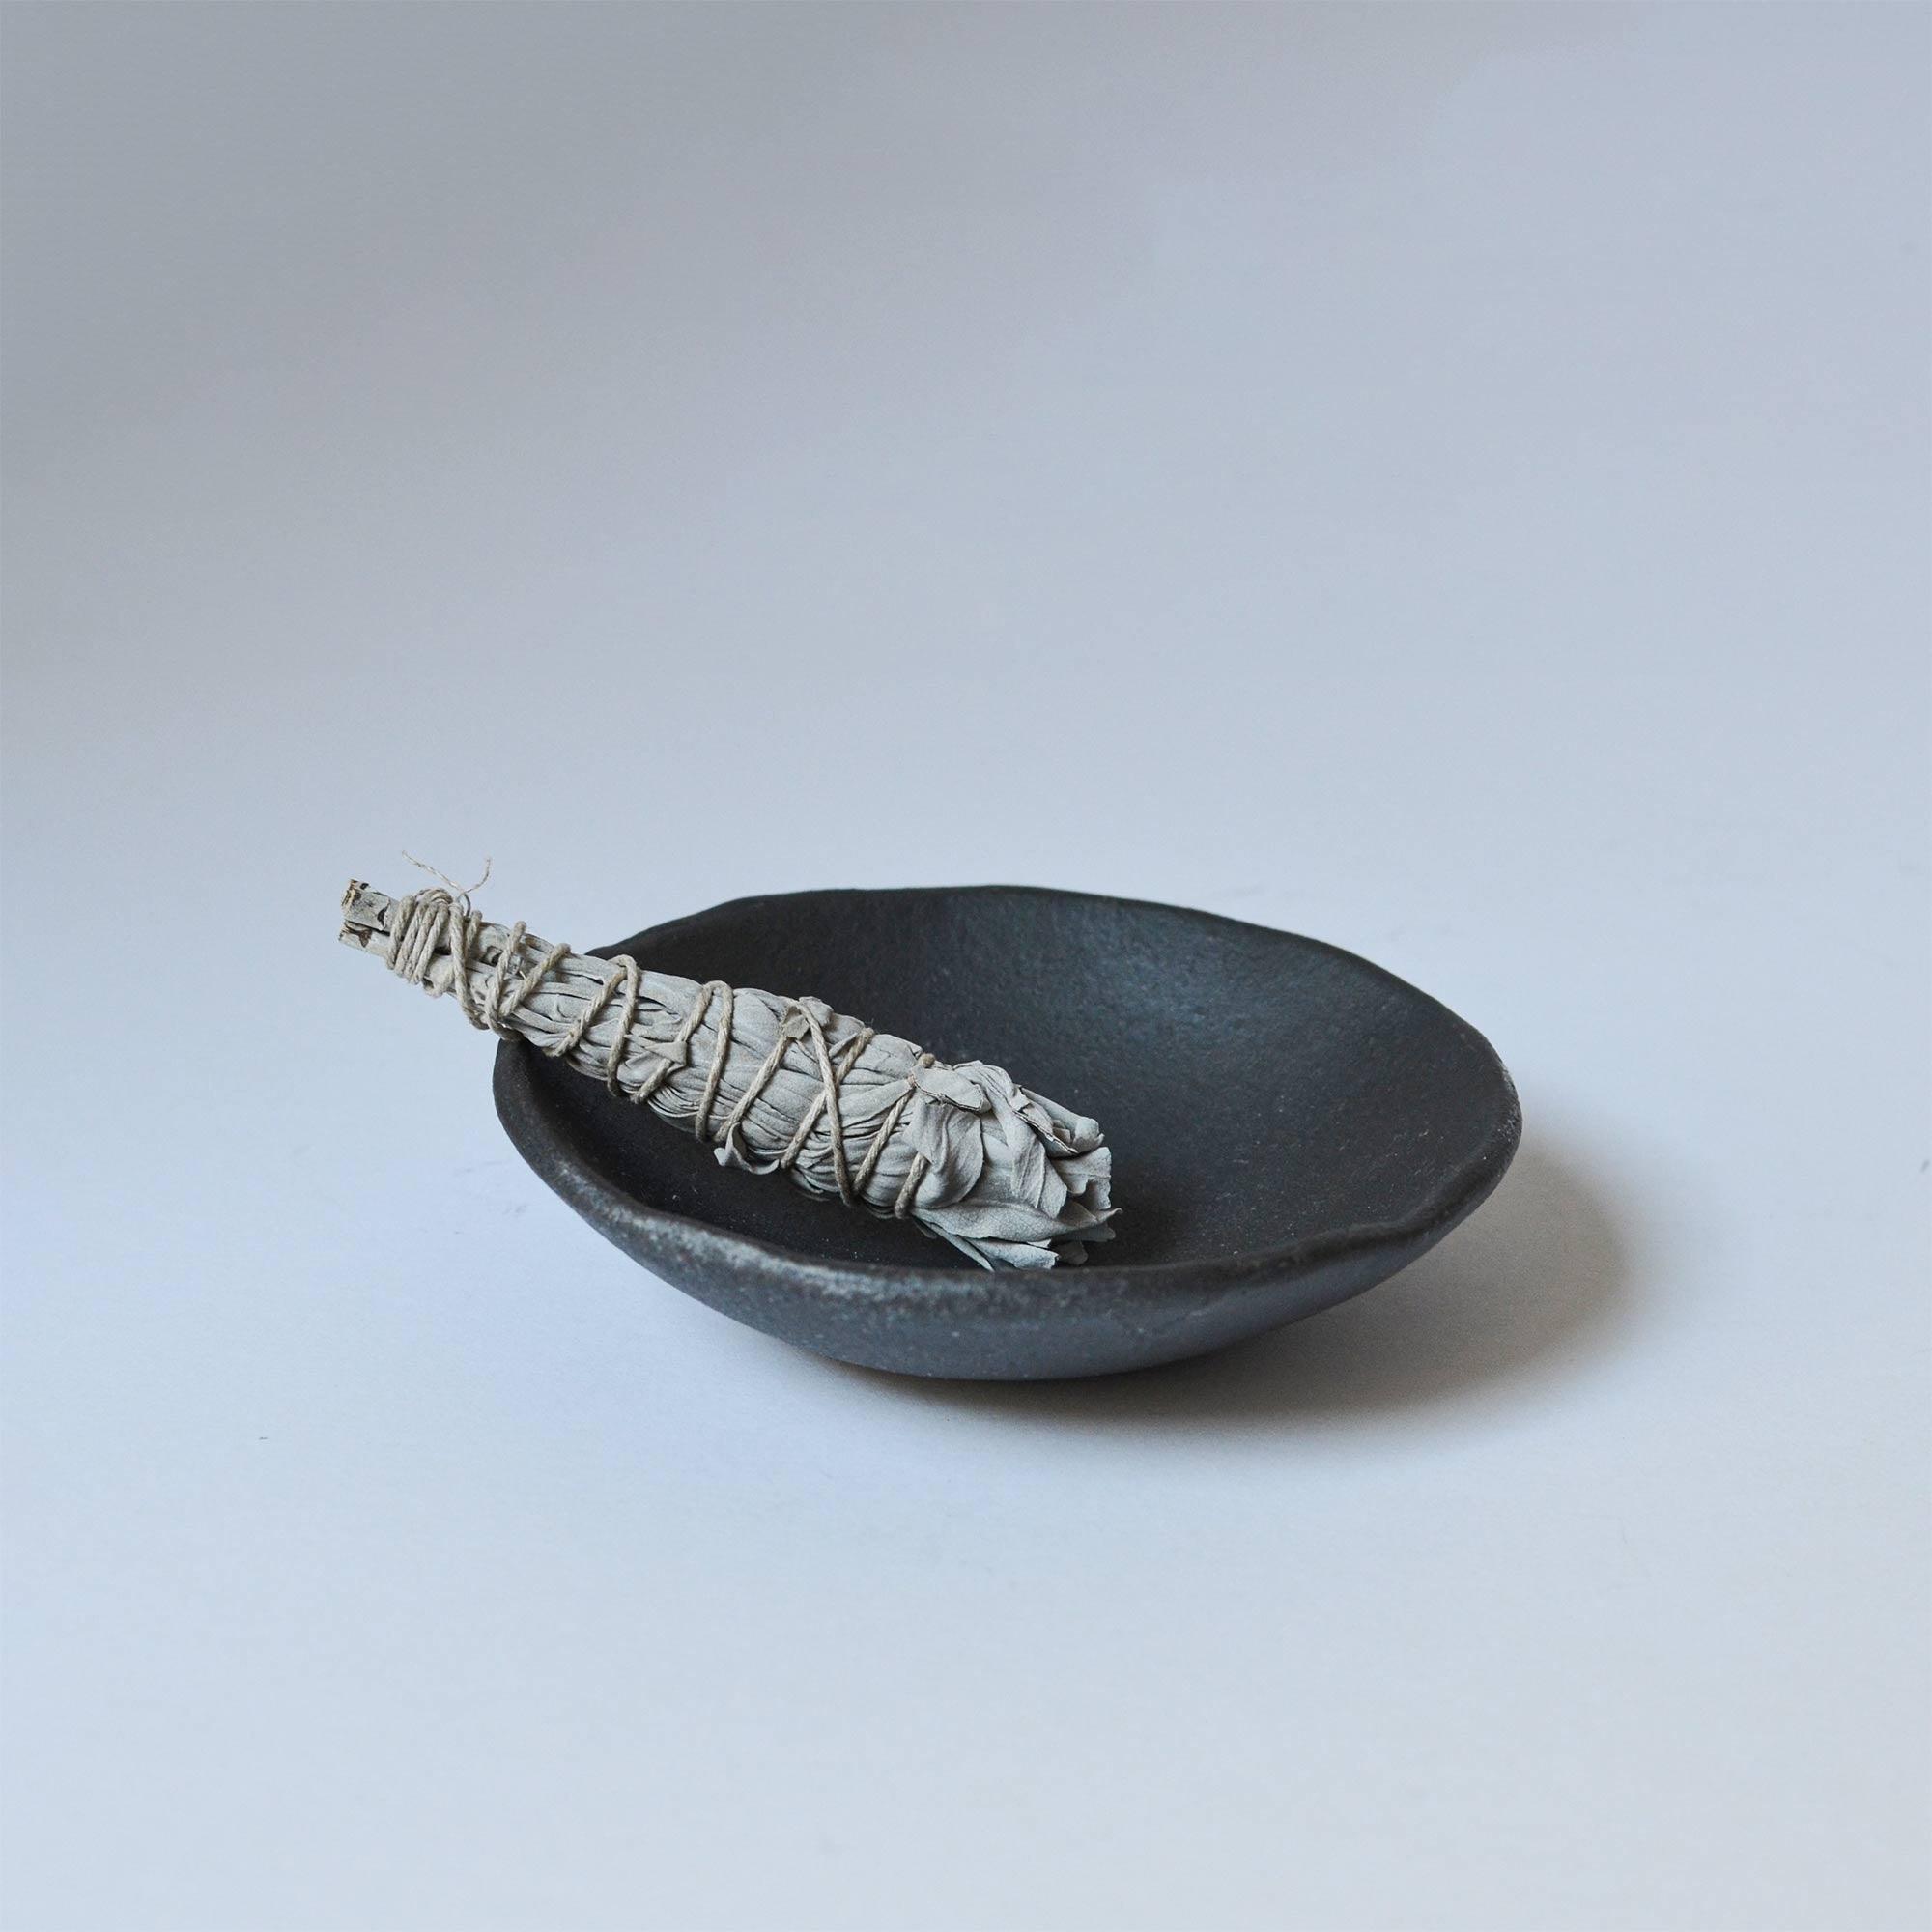 Mini white sage smudge stick on the incense bowl.